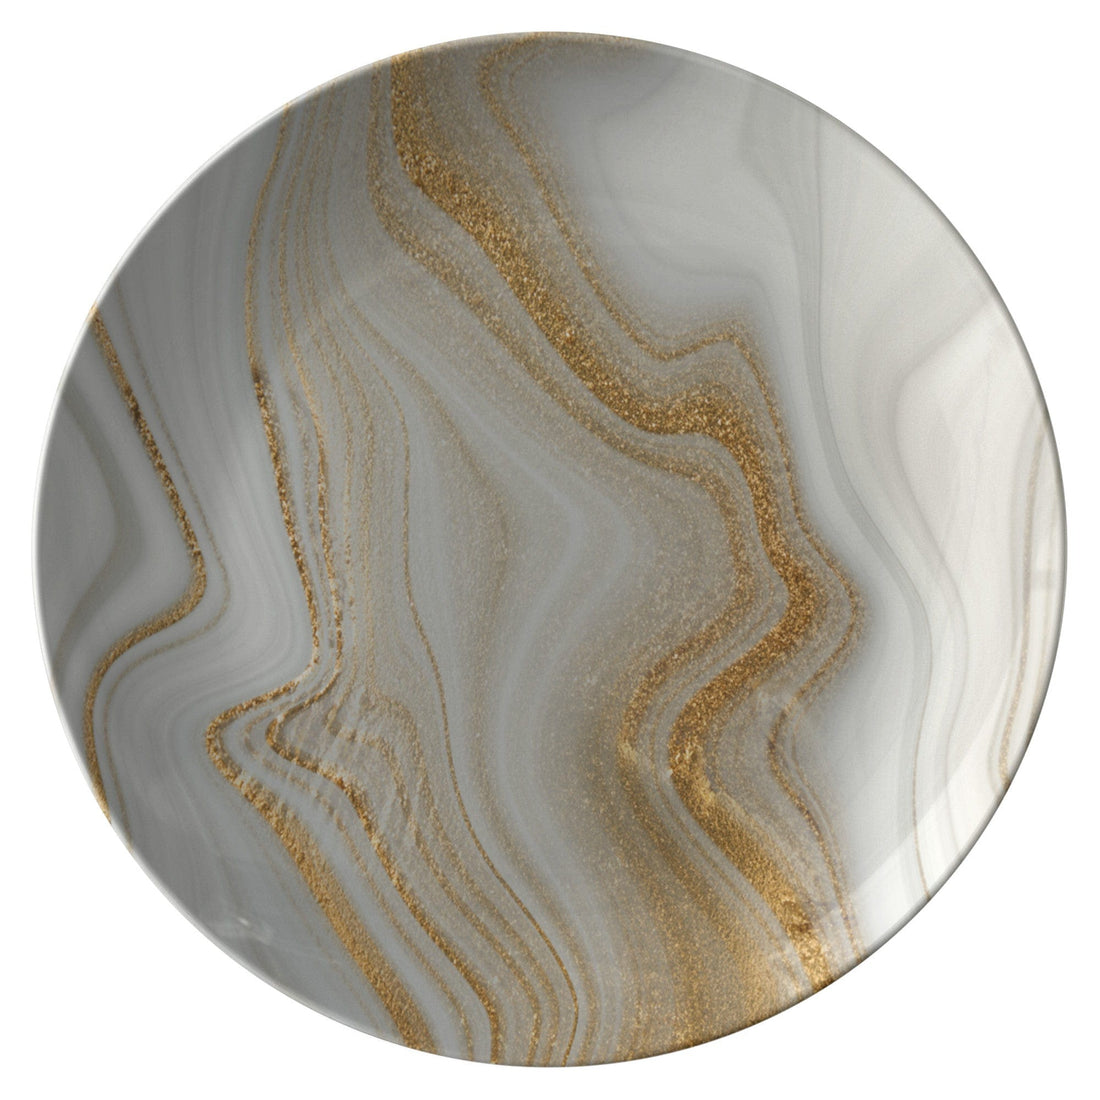 Kate McEnroe New York Cream and Gold Marble Dinner PlatePlatesP20 - CGO - MAR - S29